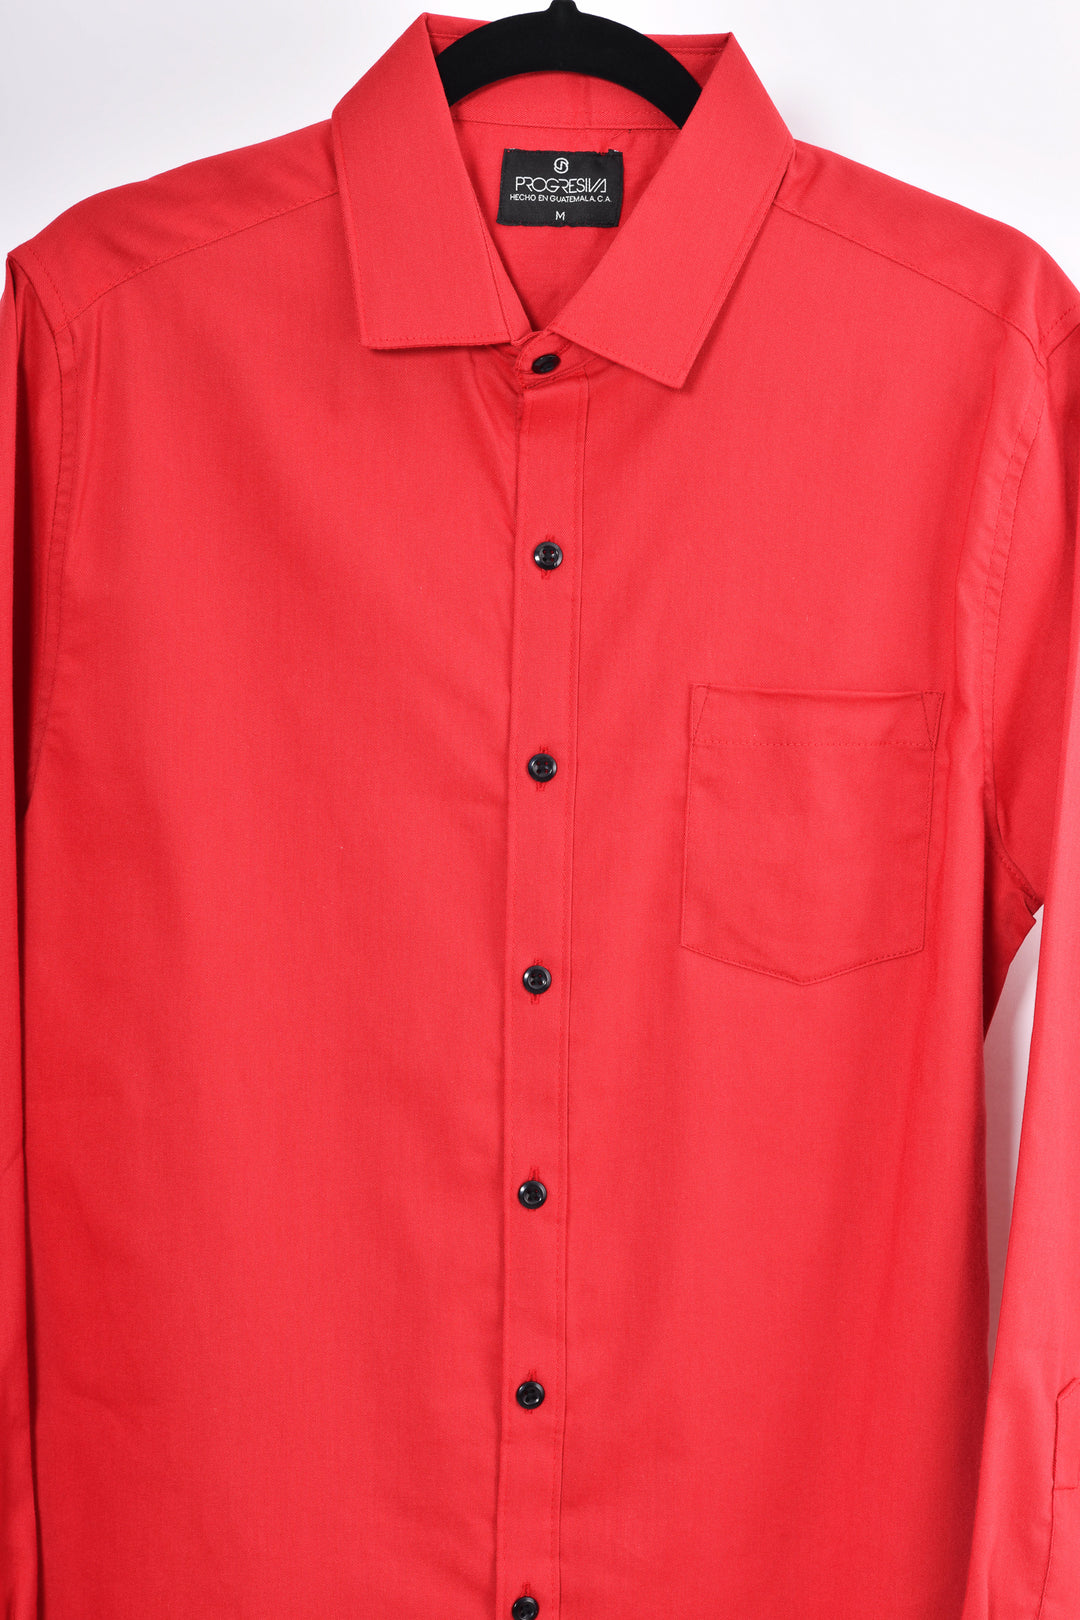 Basics - Camisa de manga larga para mujer, con cuello redondo, casual, para  uso diario (7-rojo, M)